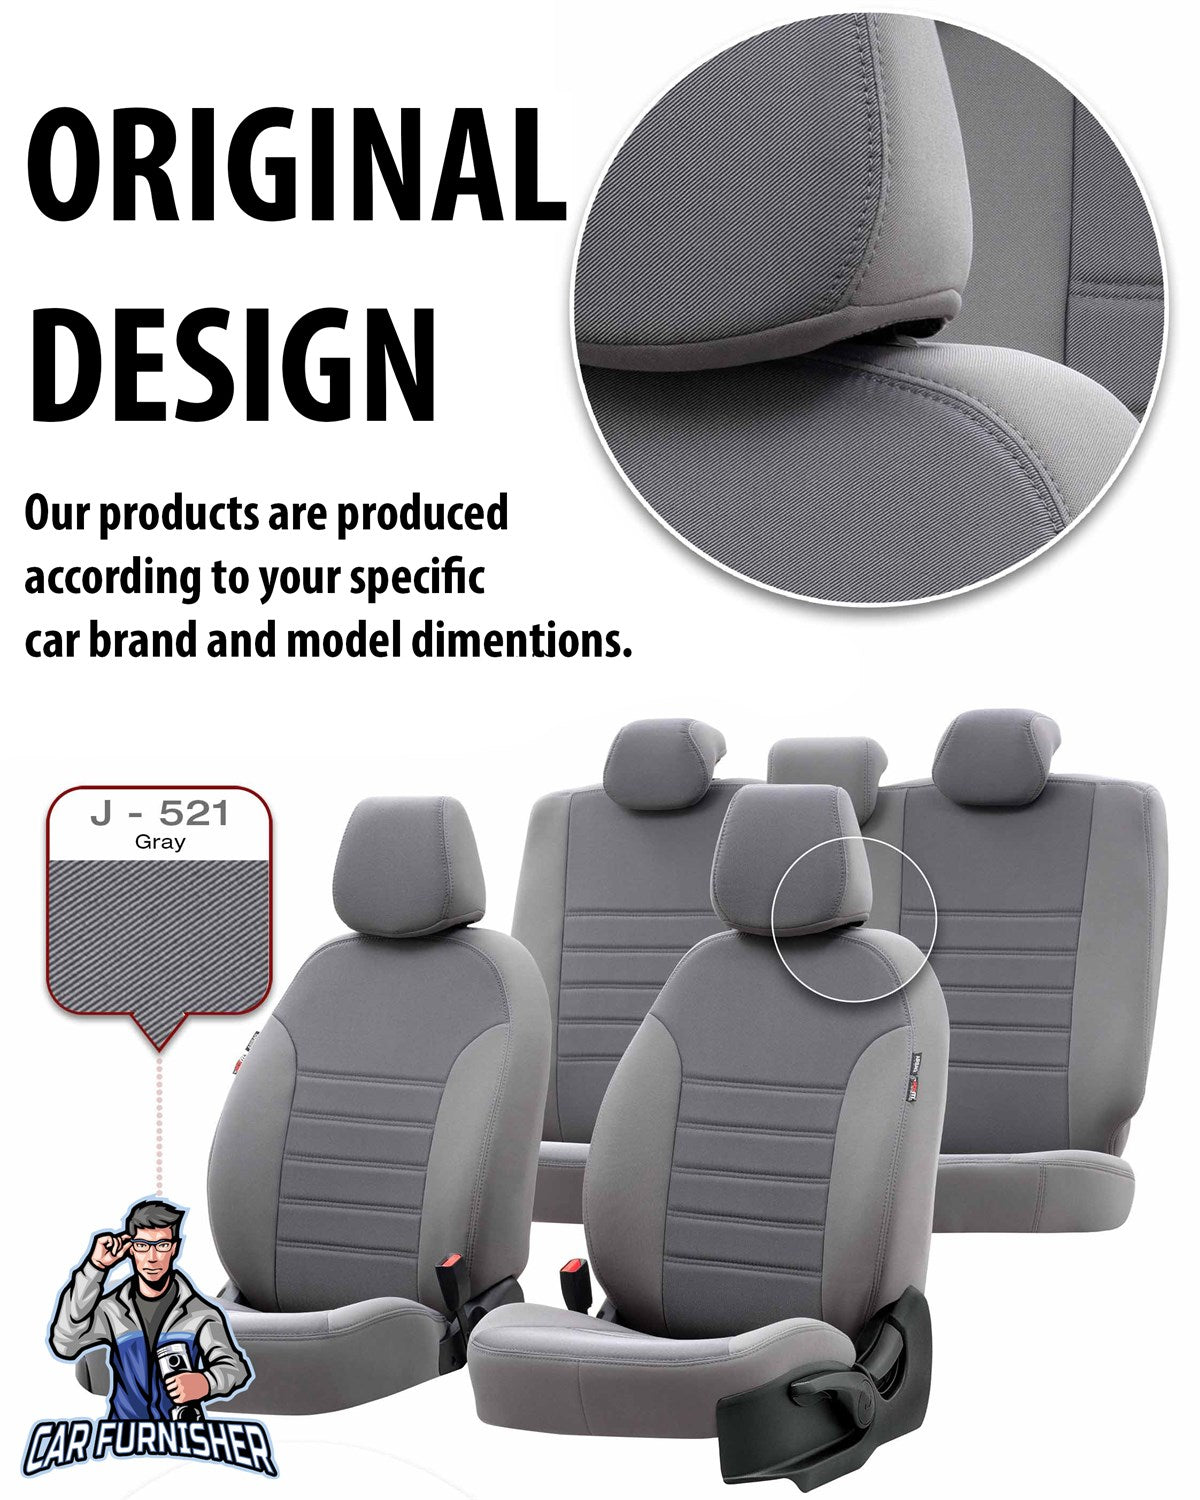 Audi A4 Seat Cover Original Jacquard Design Smoked Jacquard Fabric